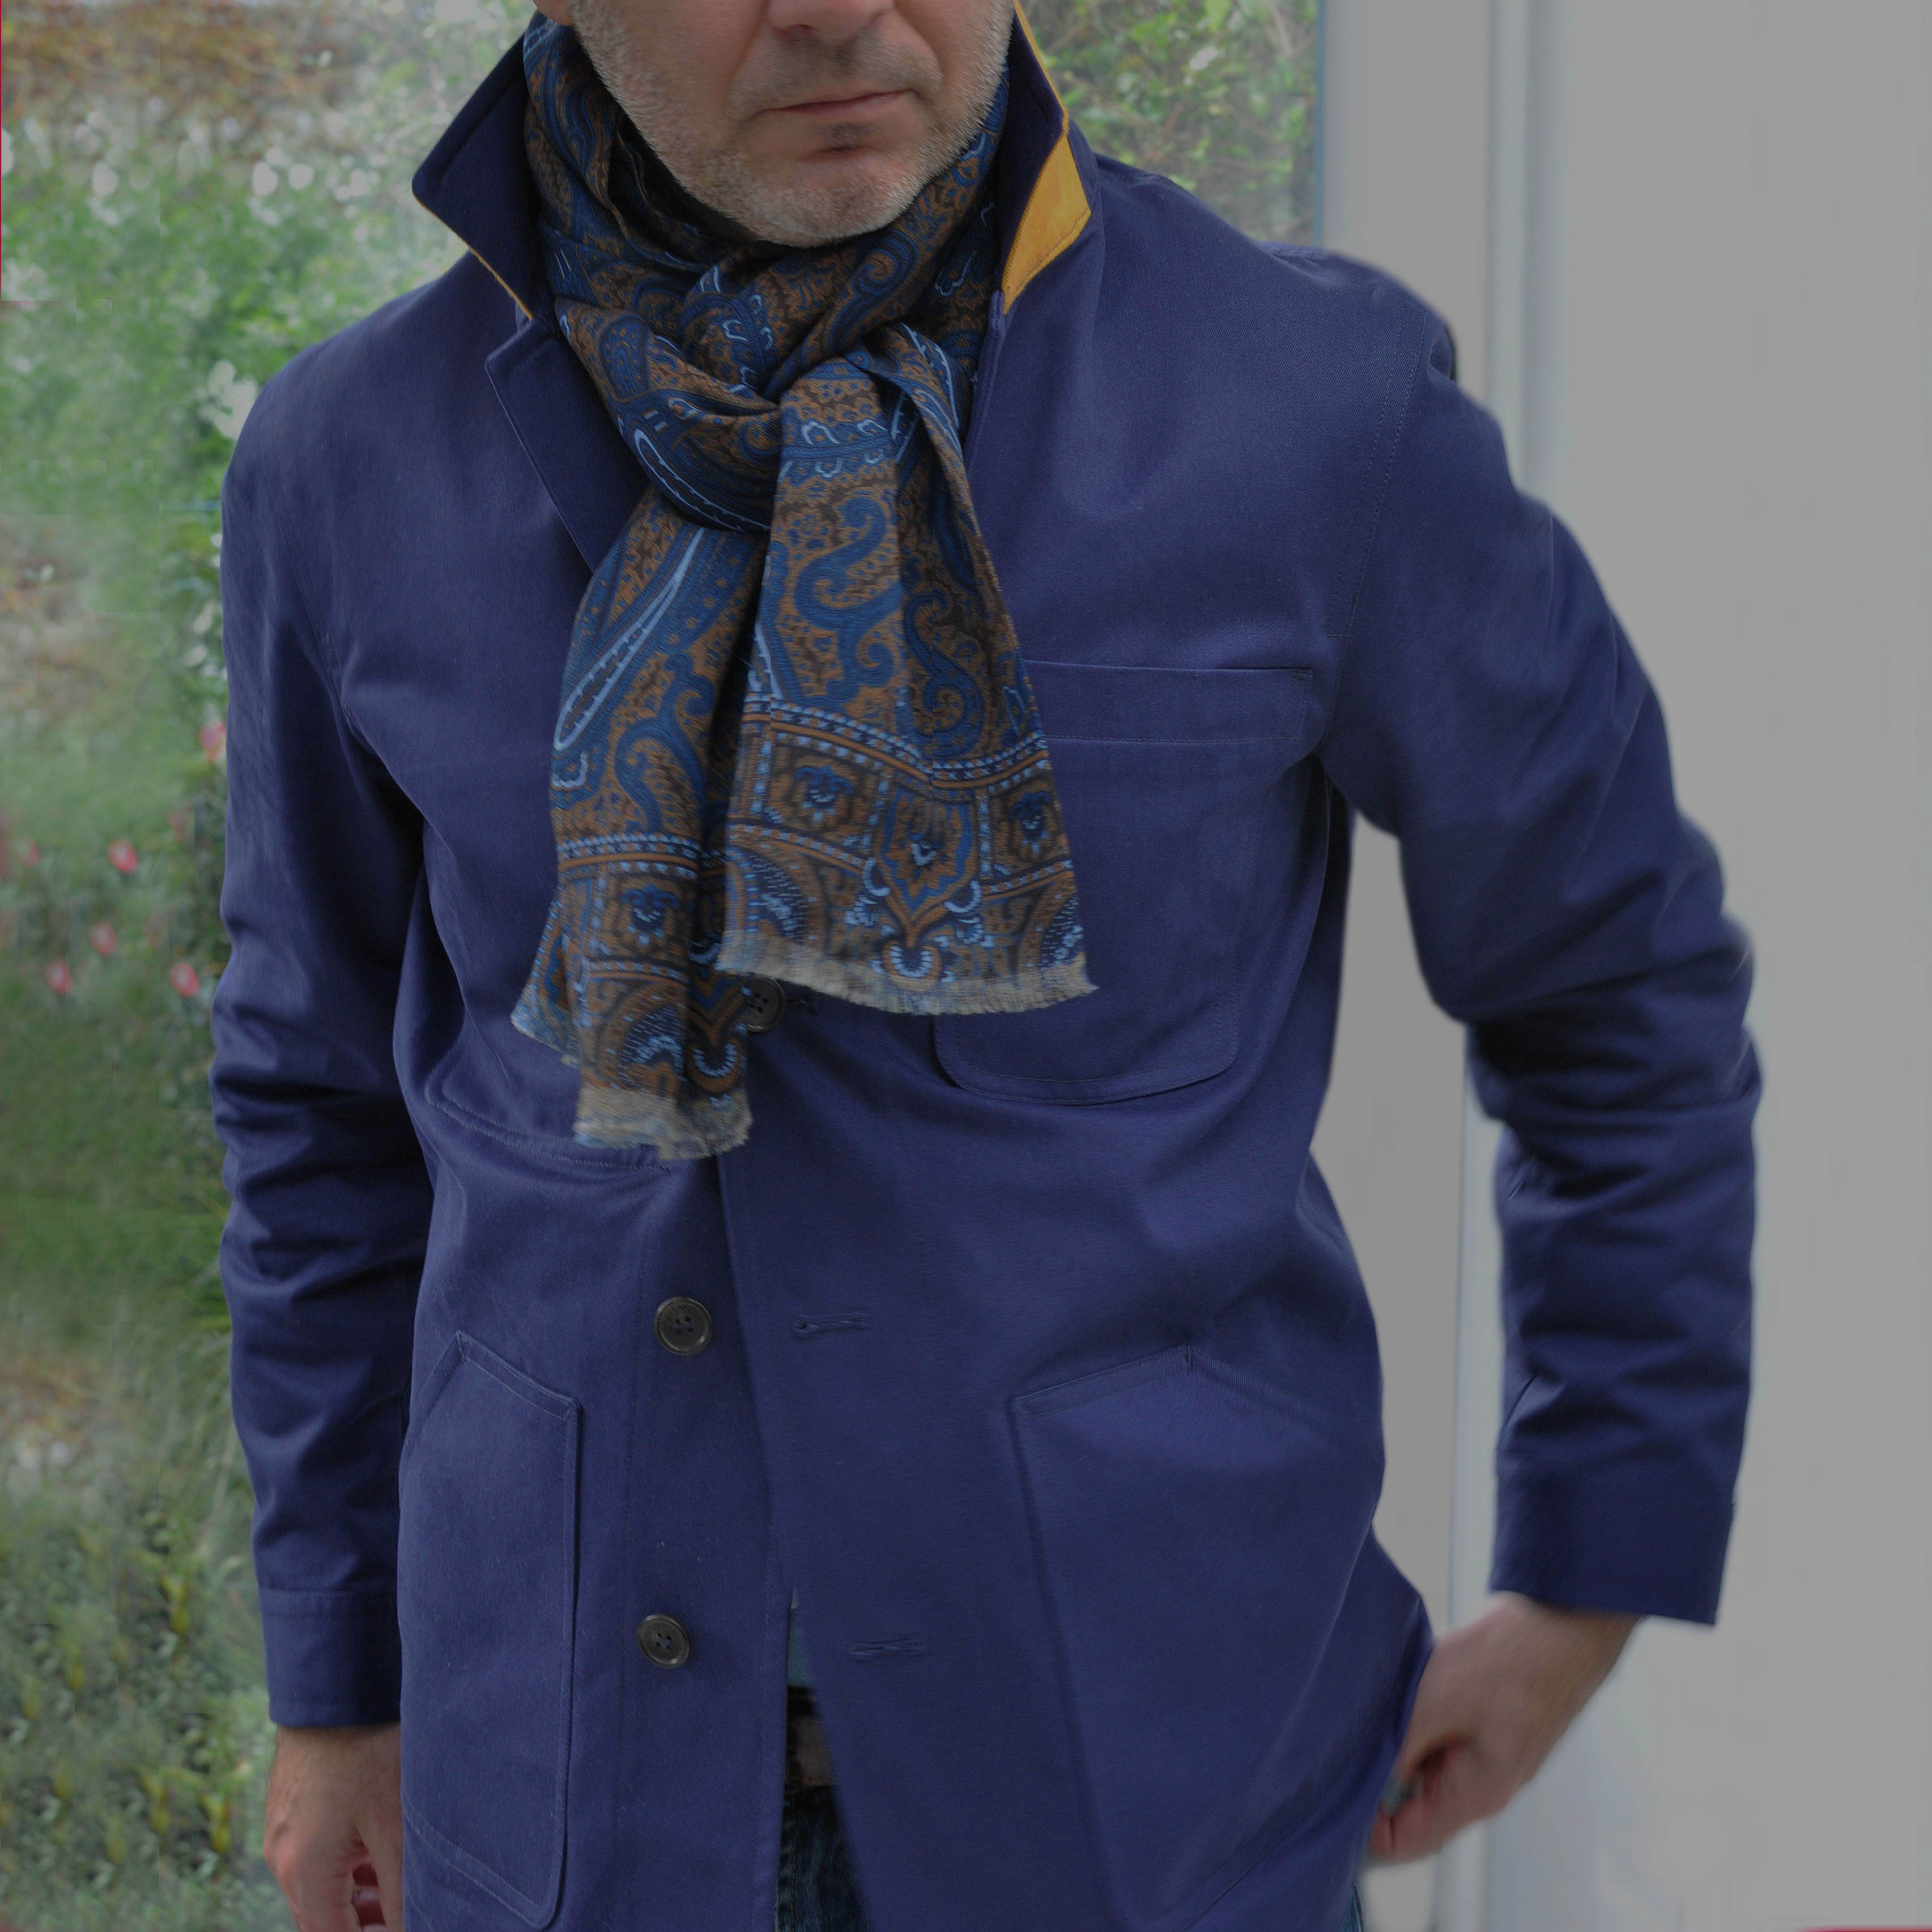 Heavy Cotton Worker Jacket in Navy Blue with Brown (under) Collar